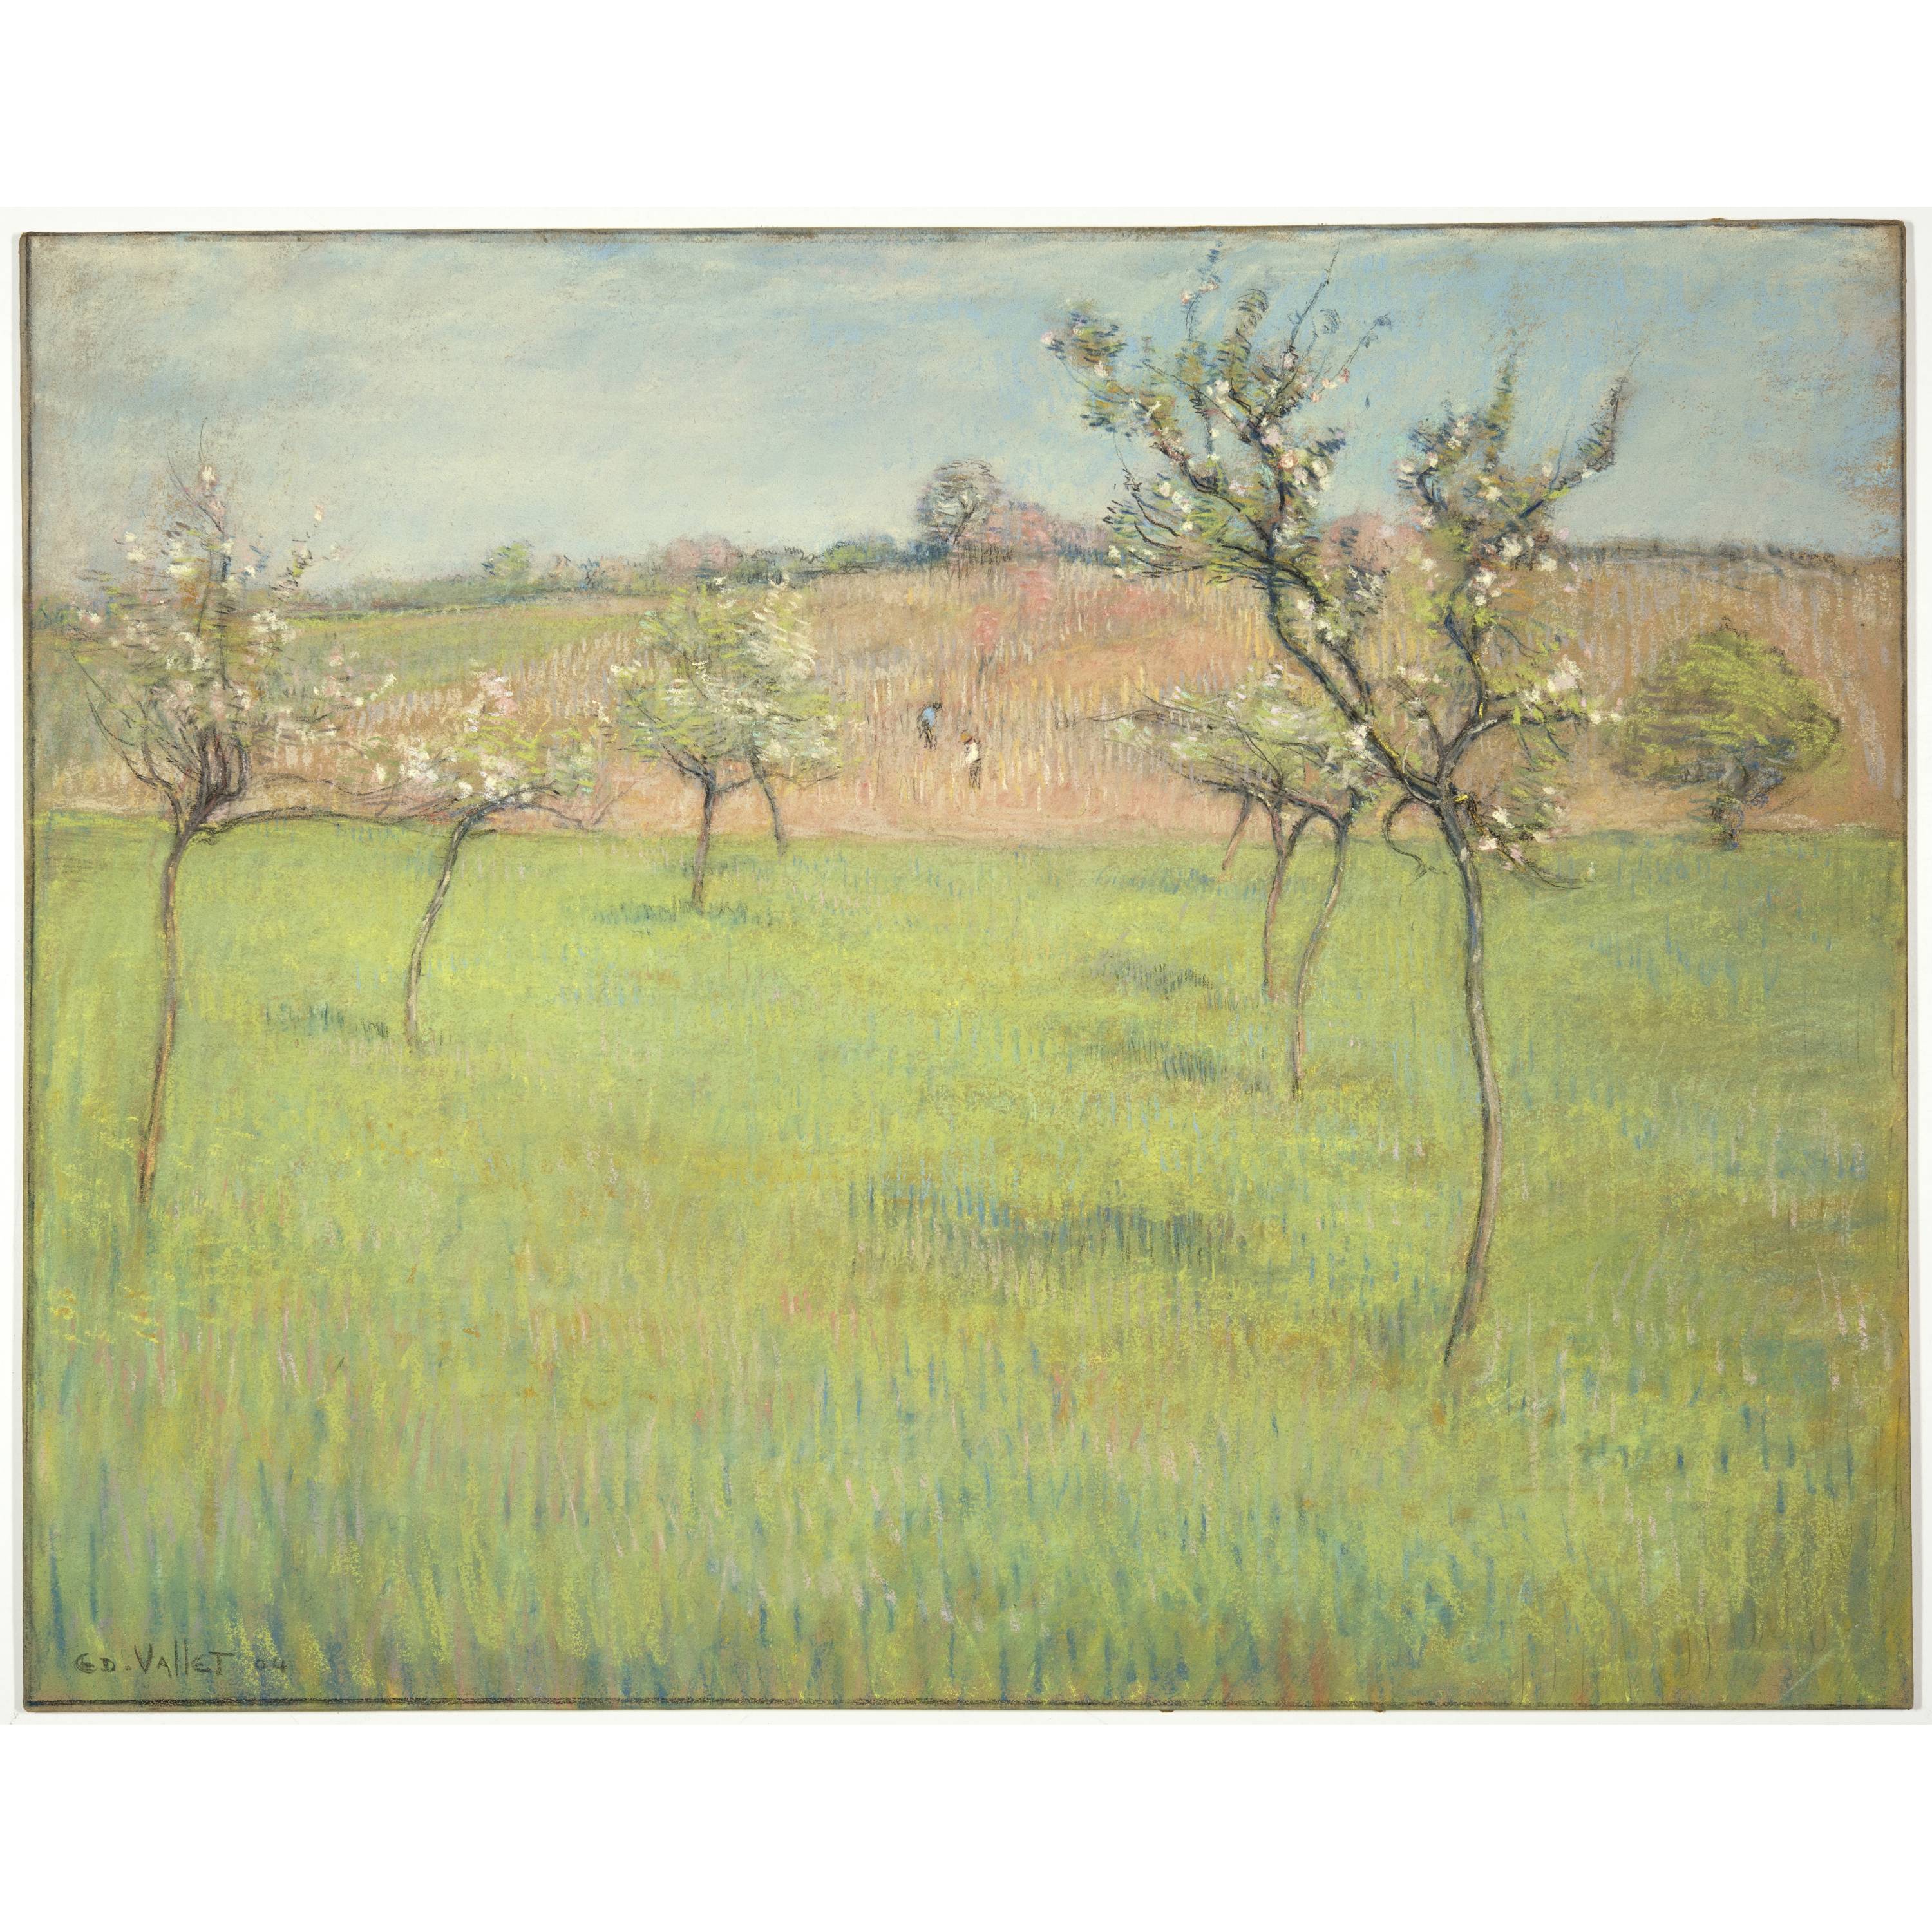 Edouard Vallet : Verger en fleurs, 1904 | Galerie Kornfeld Auktionen Bern